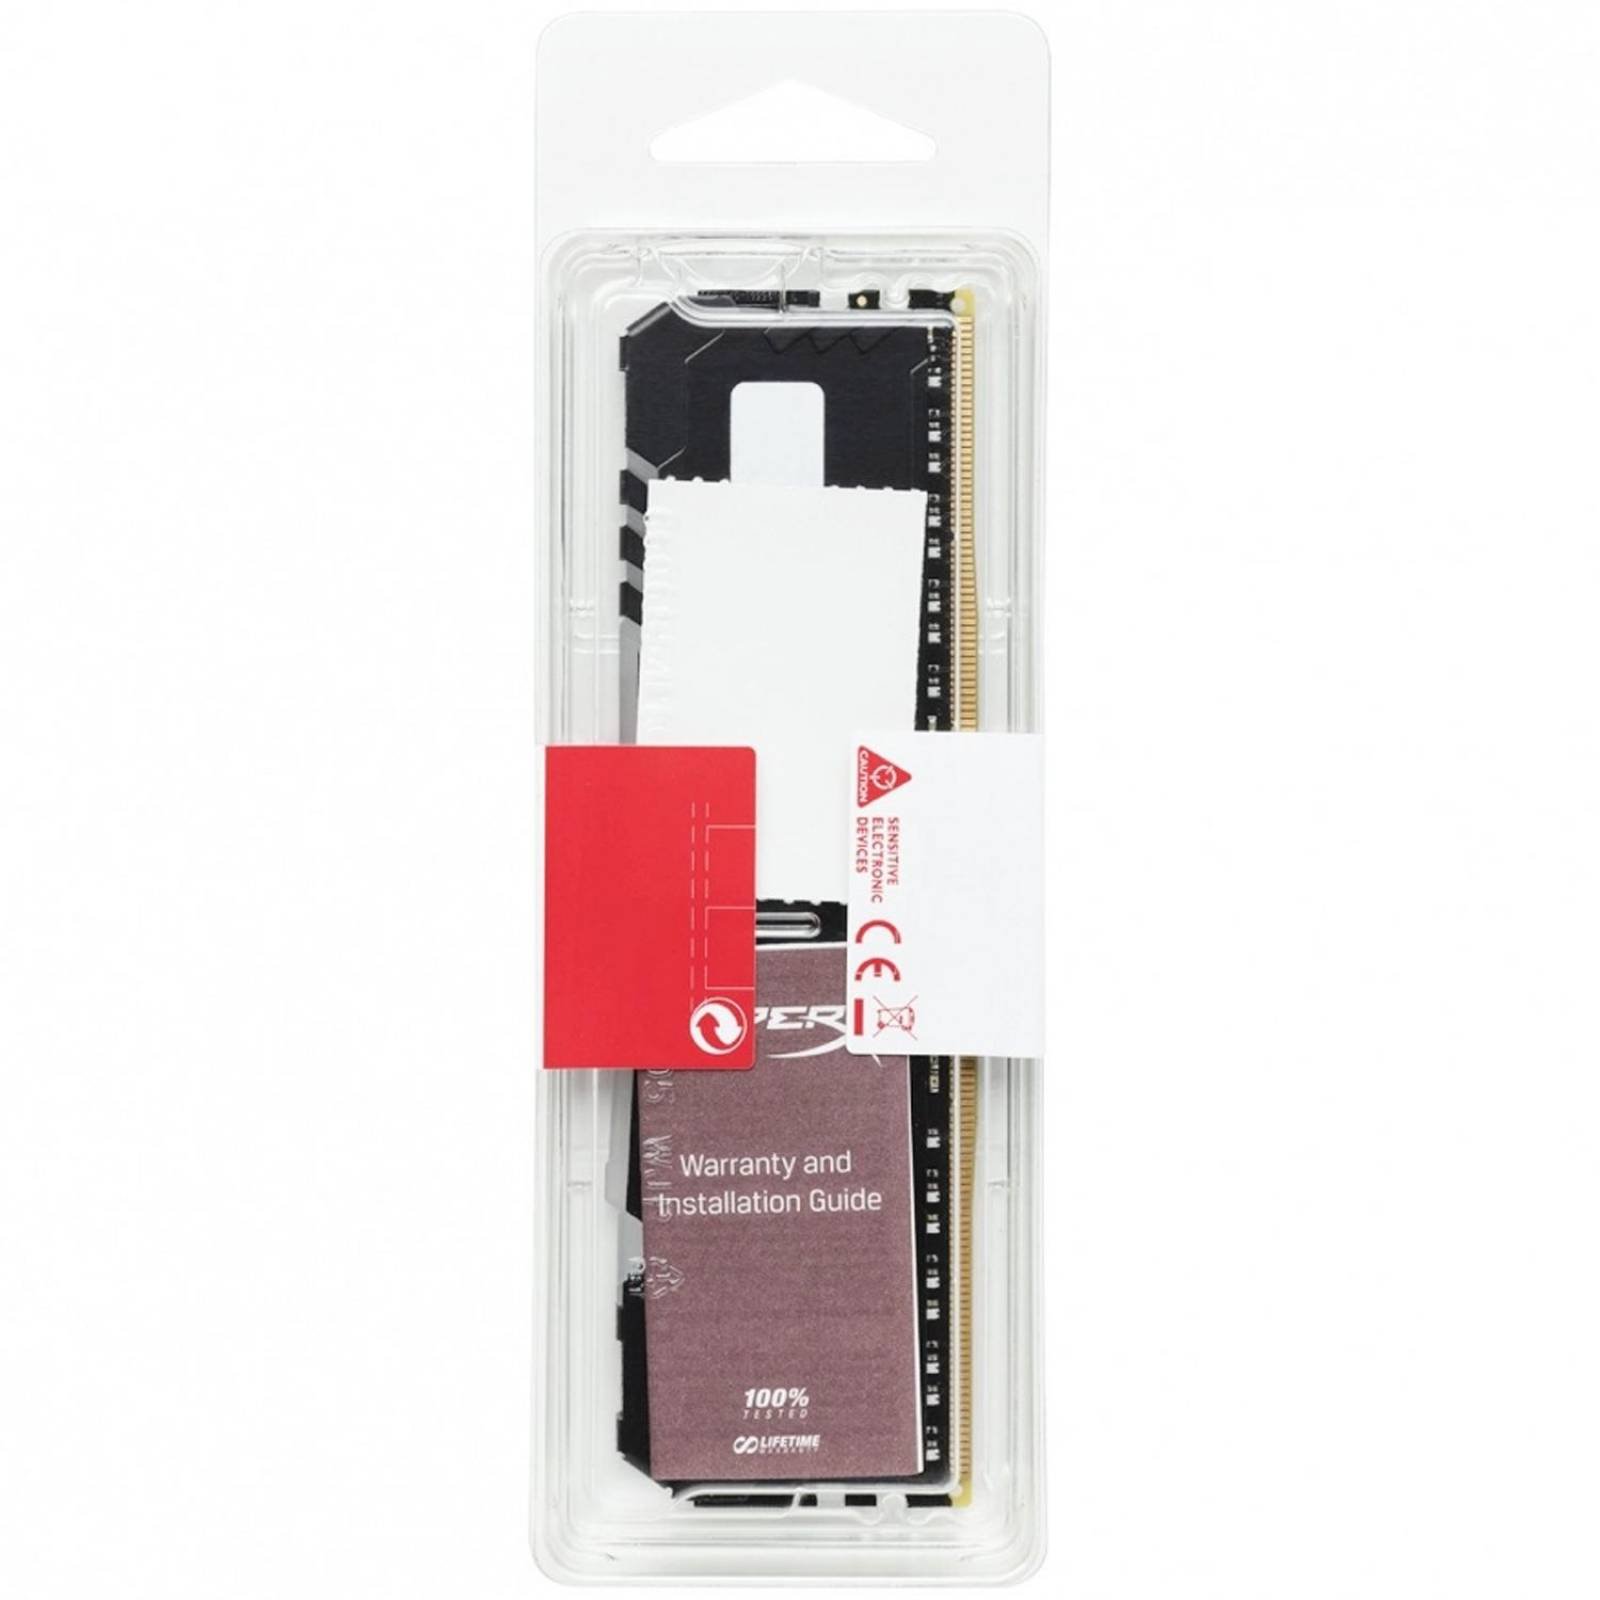 Memoria RAM DDR4 8GB 3000MHz KINGSTON HYPERX FURY RGB HX430C15FB3A/8 